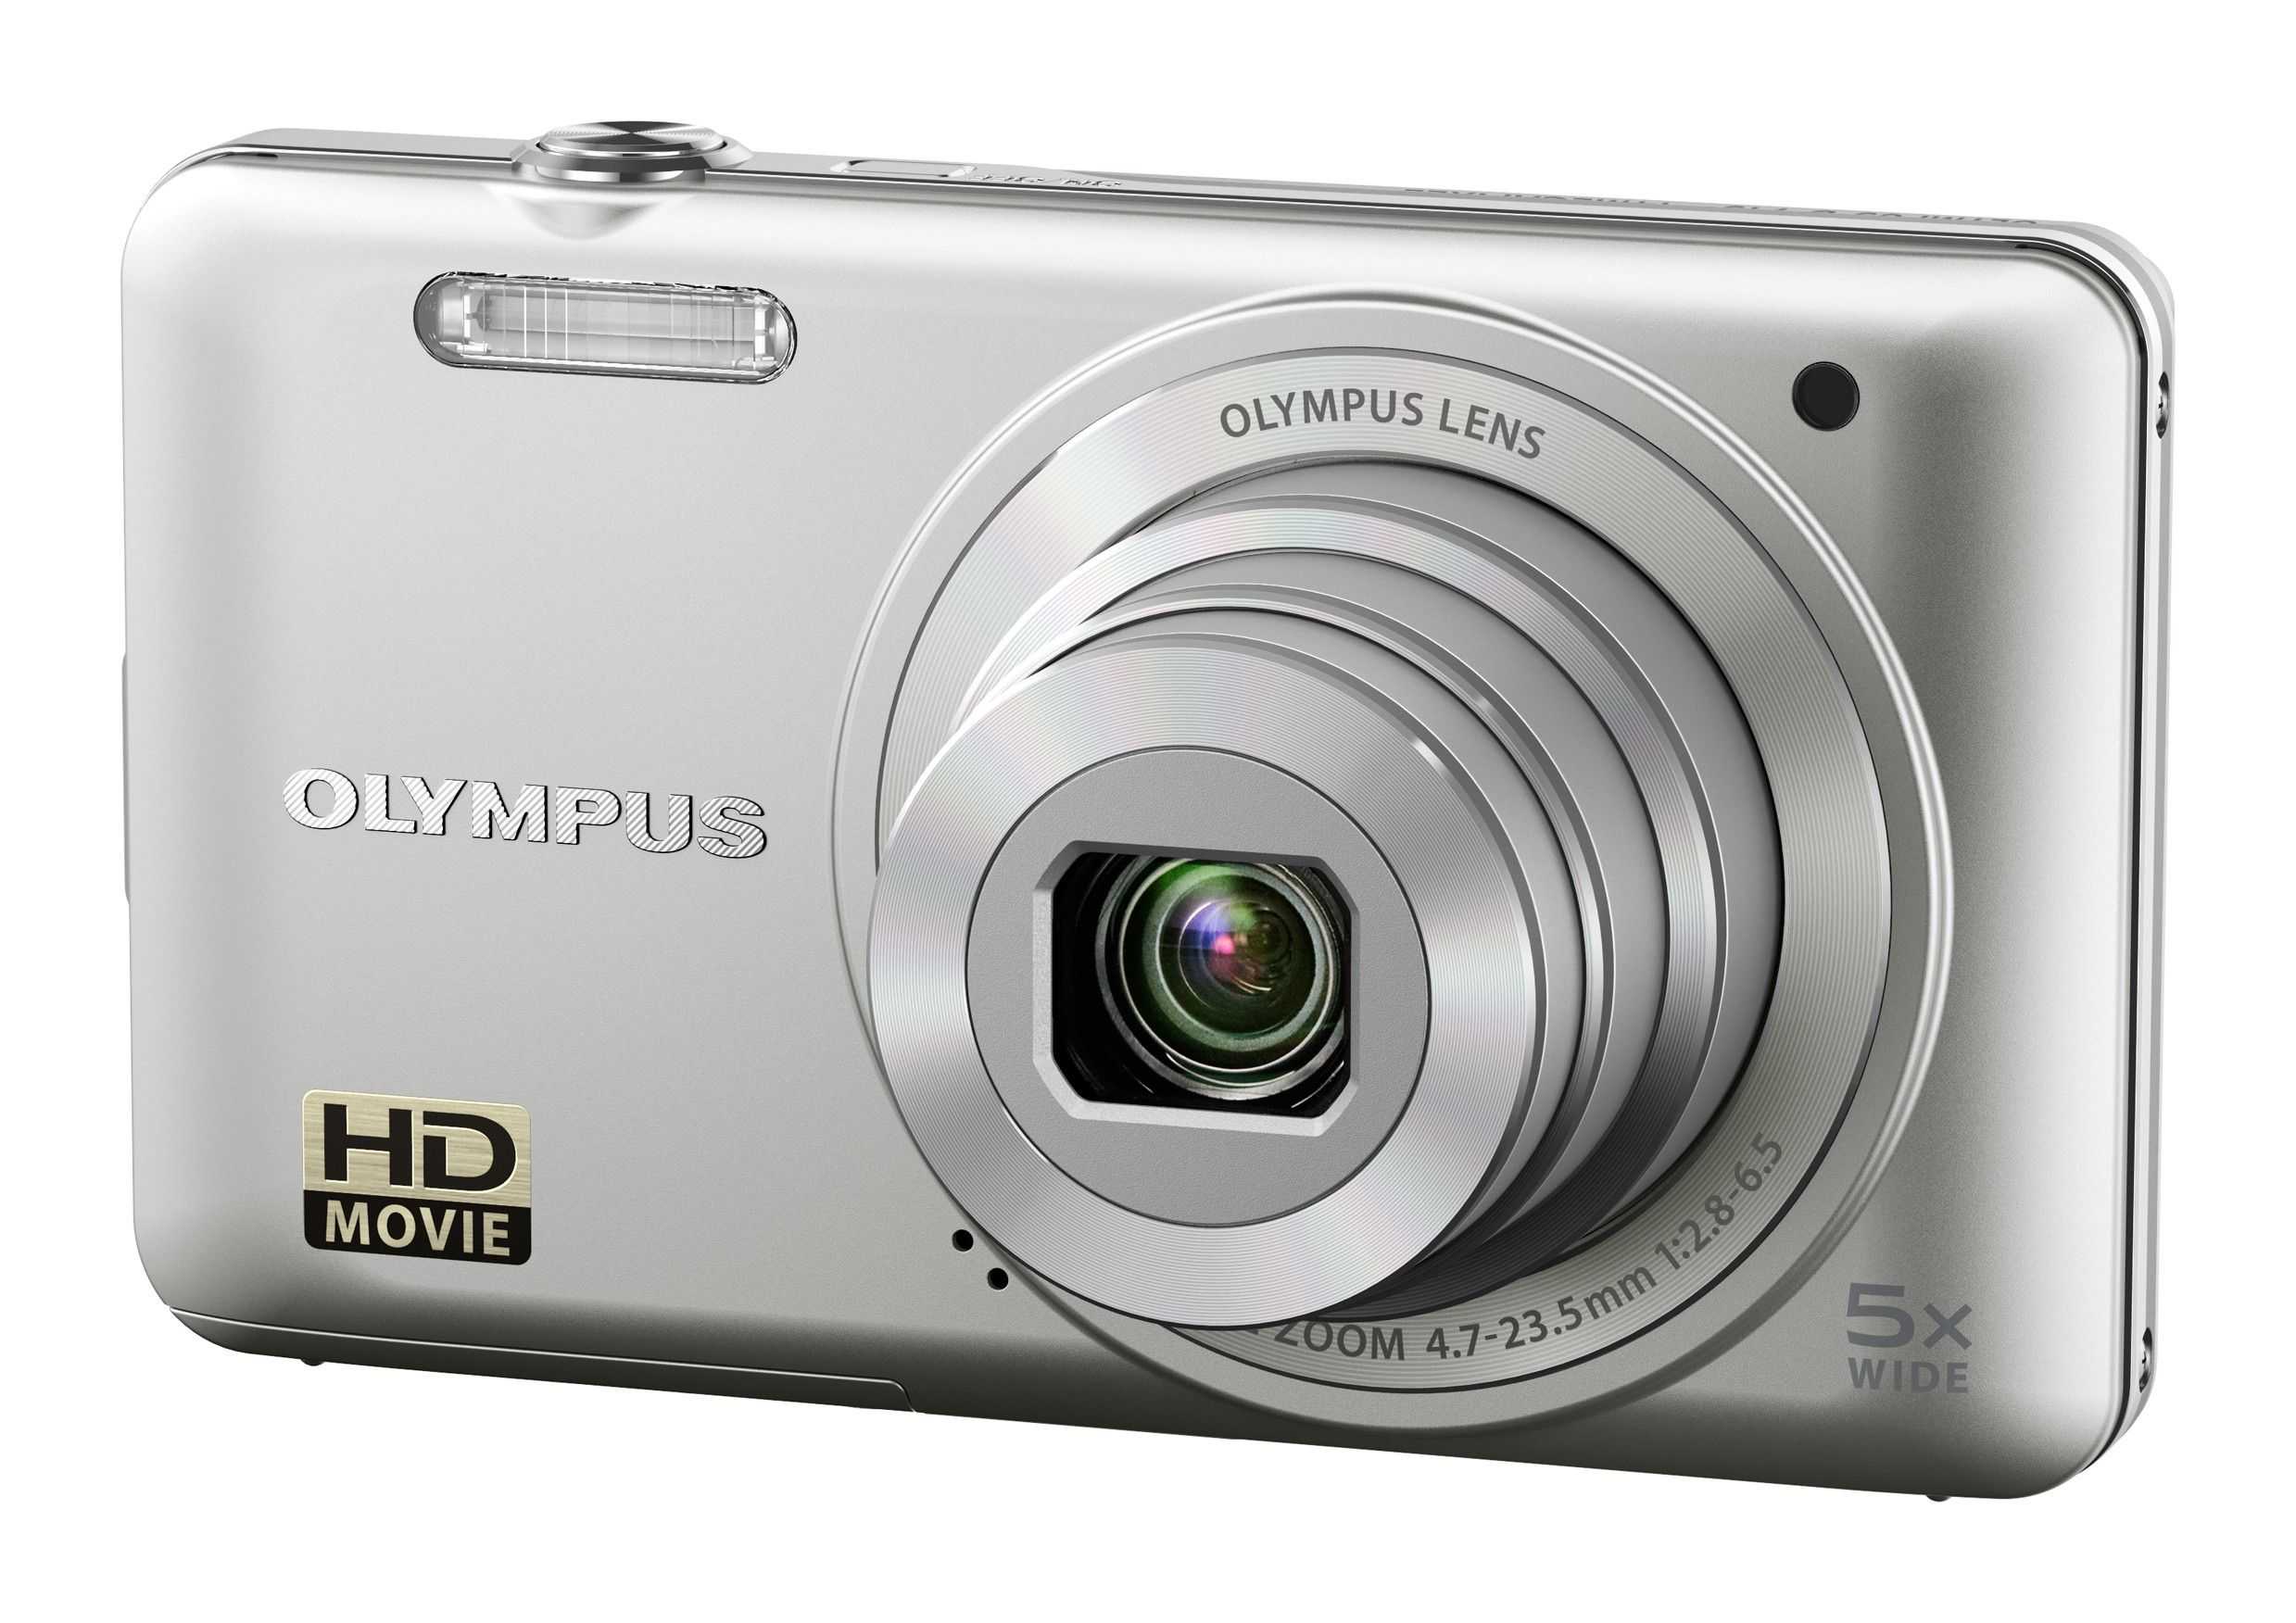 Компактный фотоаппарат olympus d-700